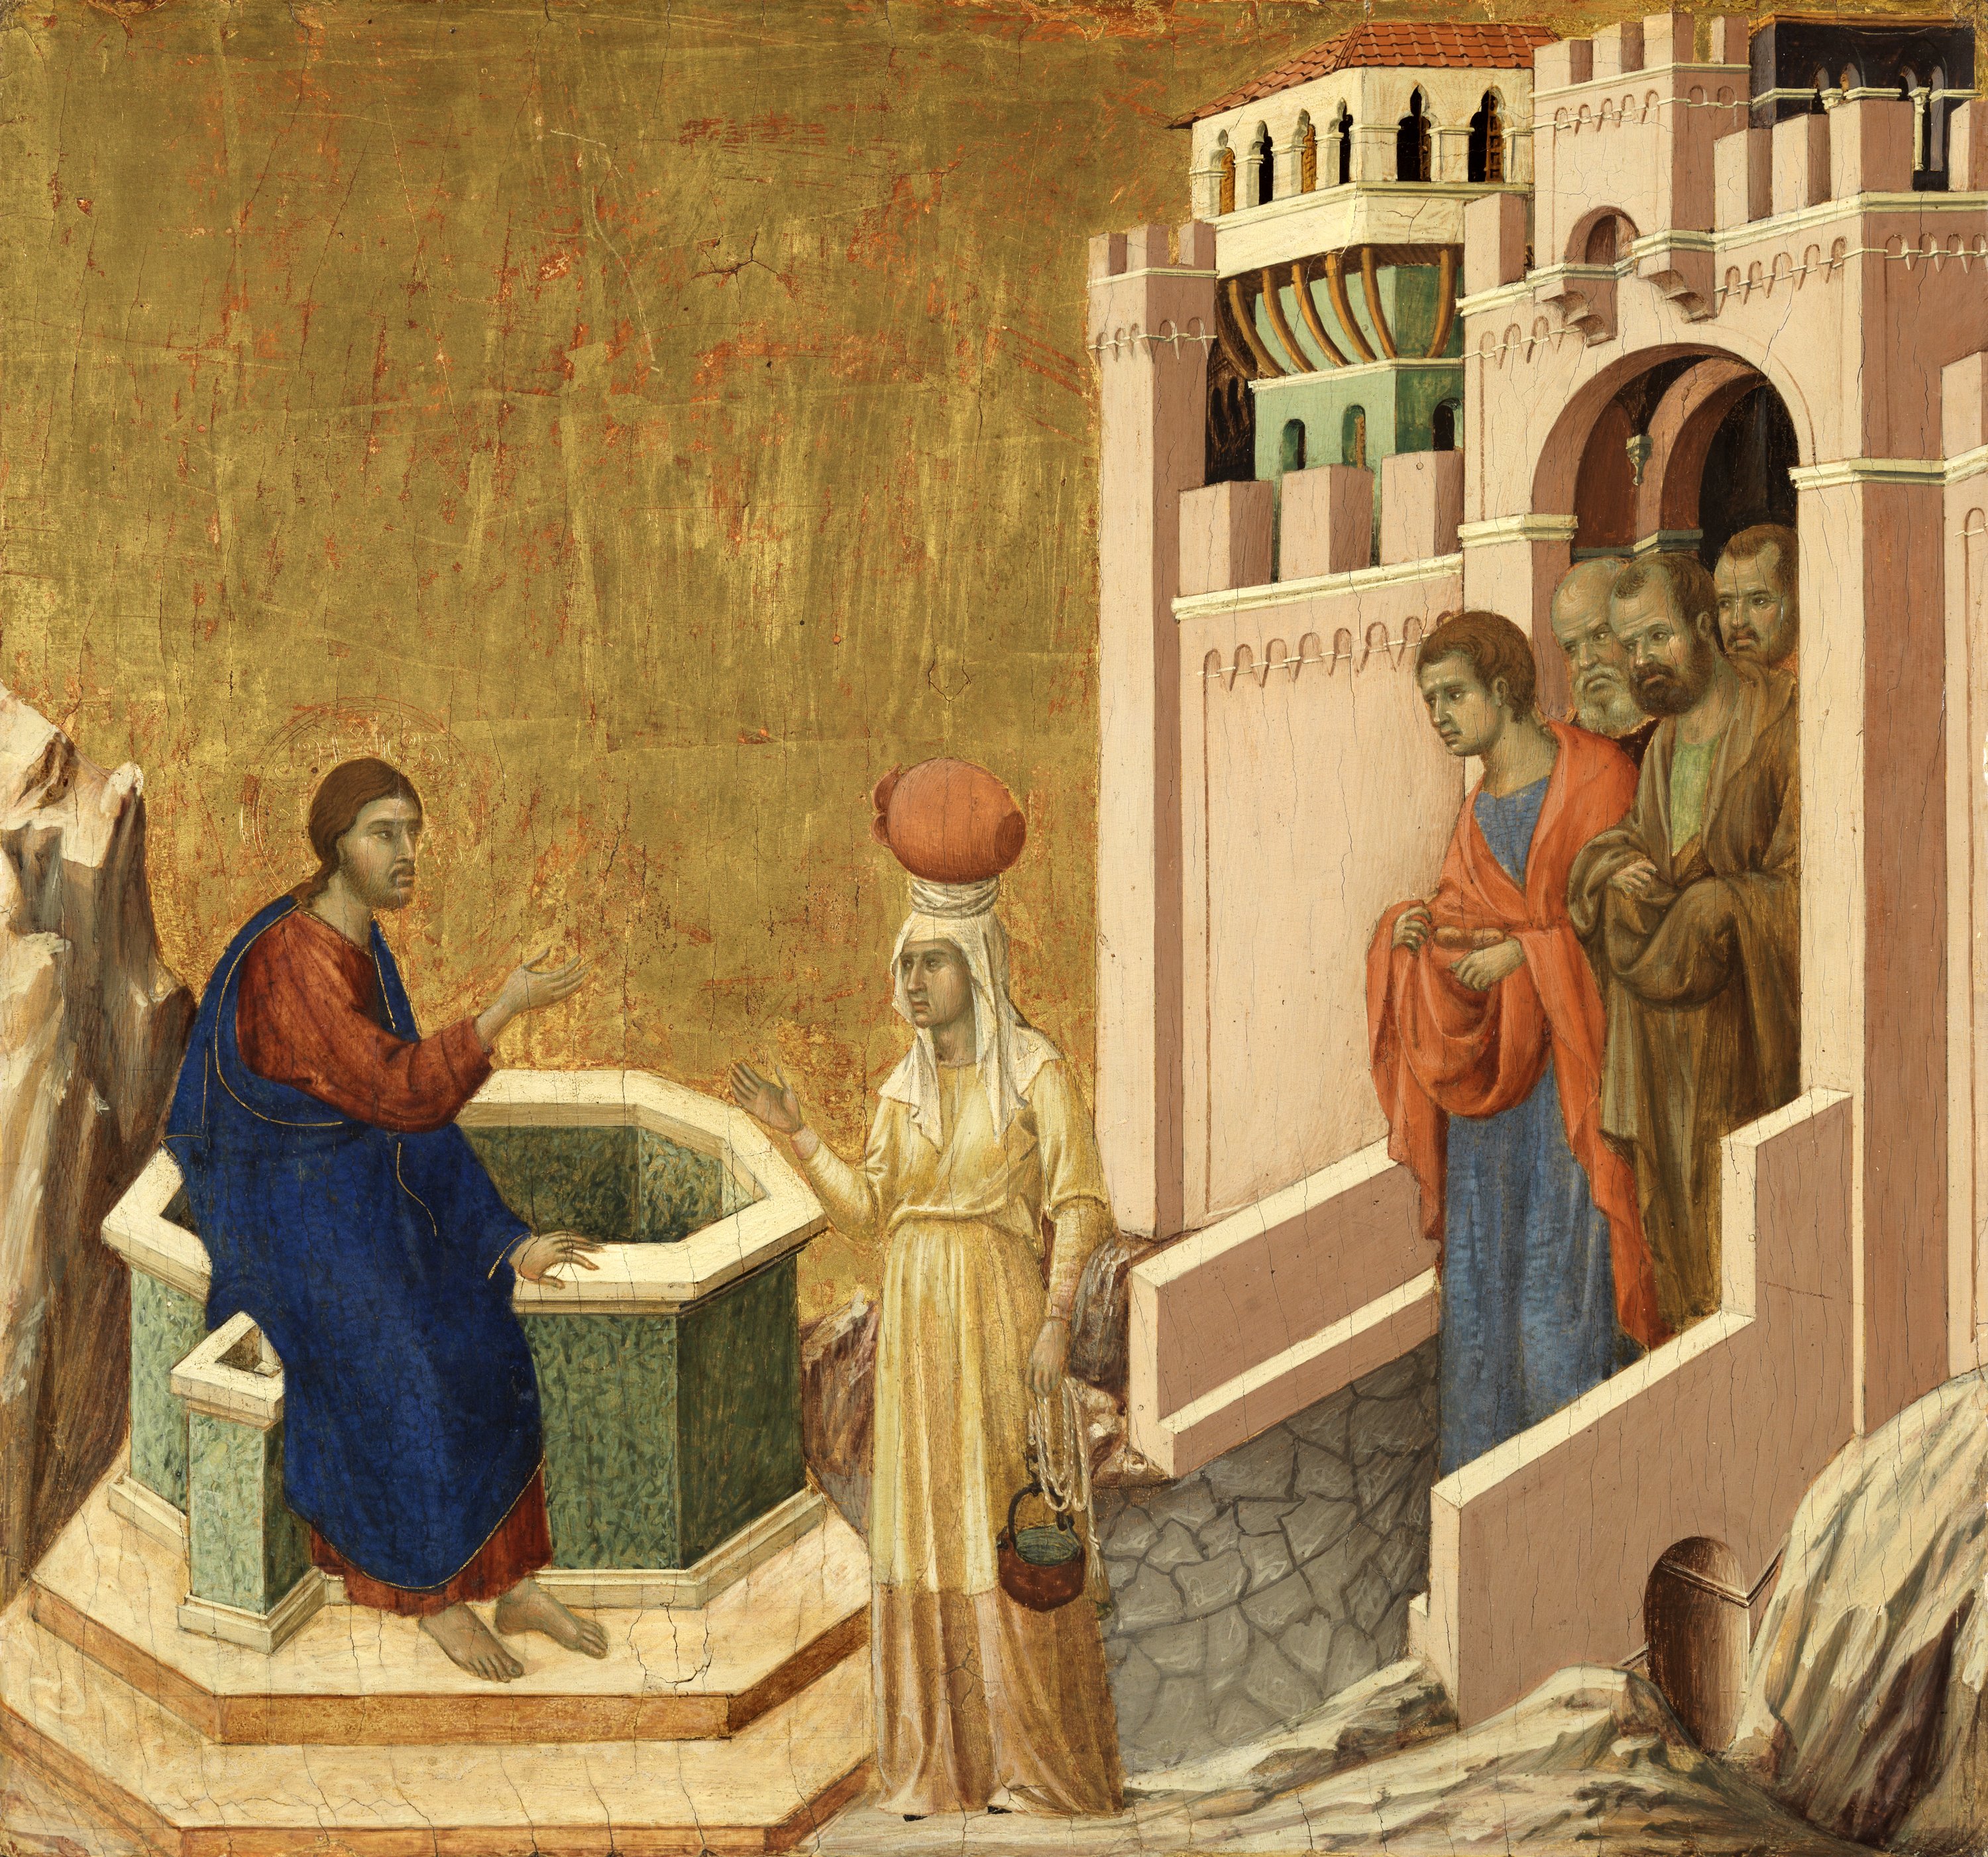 Christ and the Samaritan Woman. Cristo y la samaritana, 1310-1311